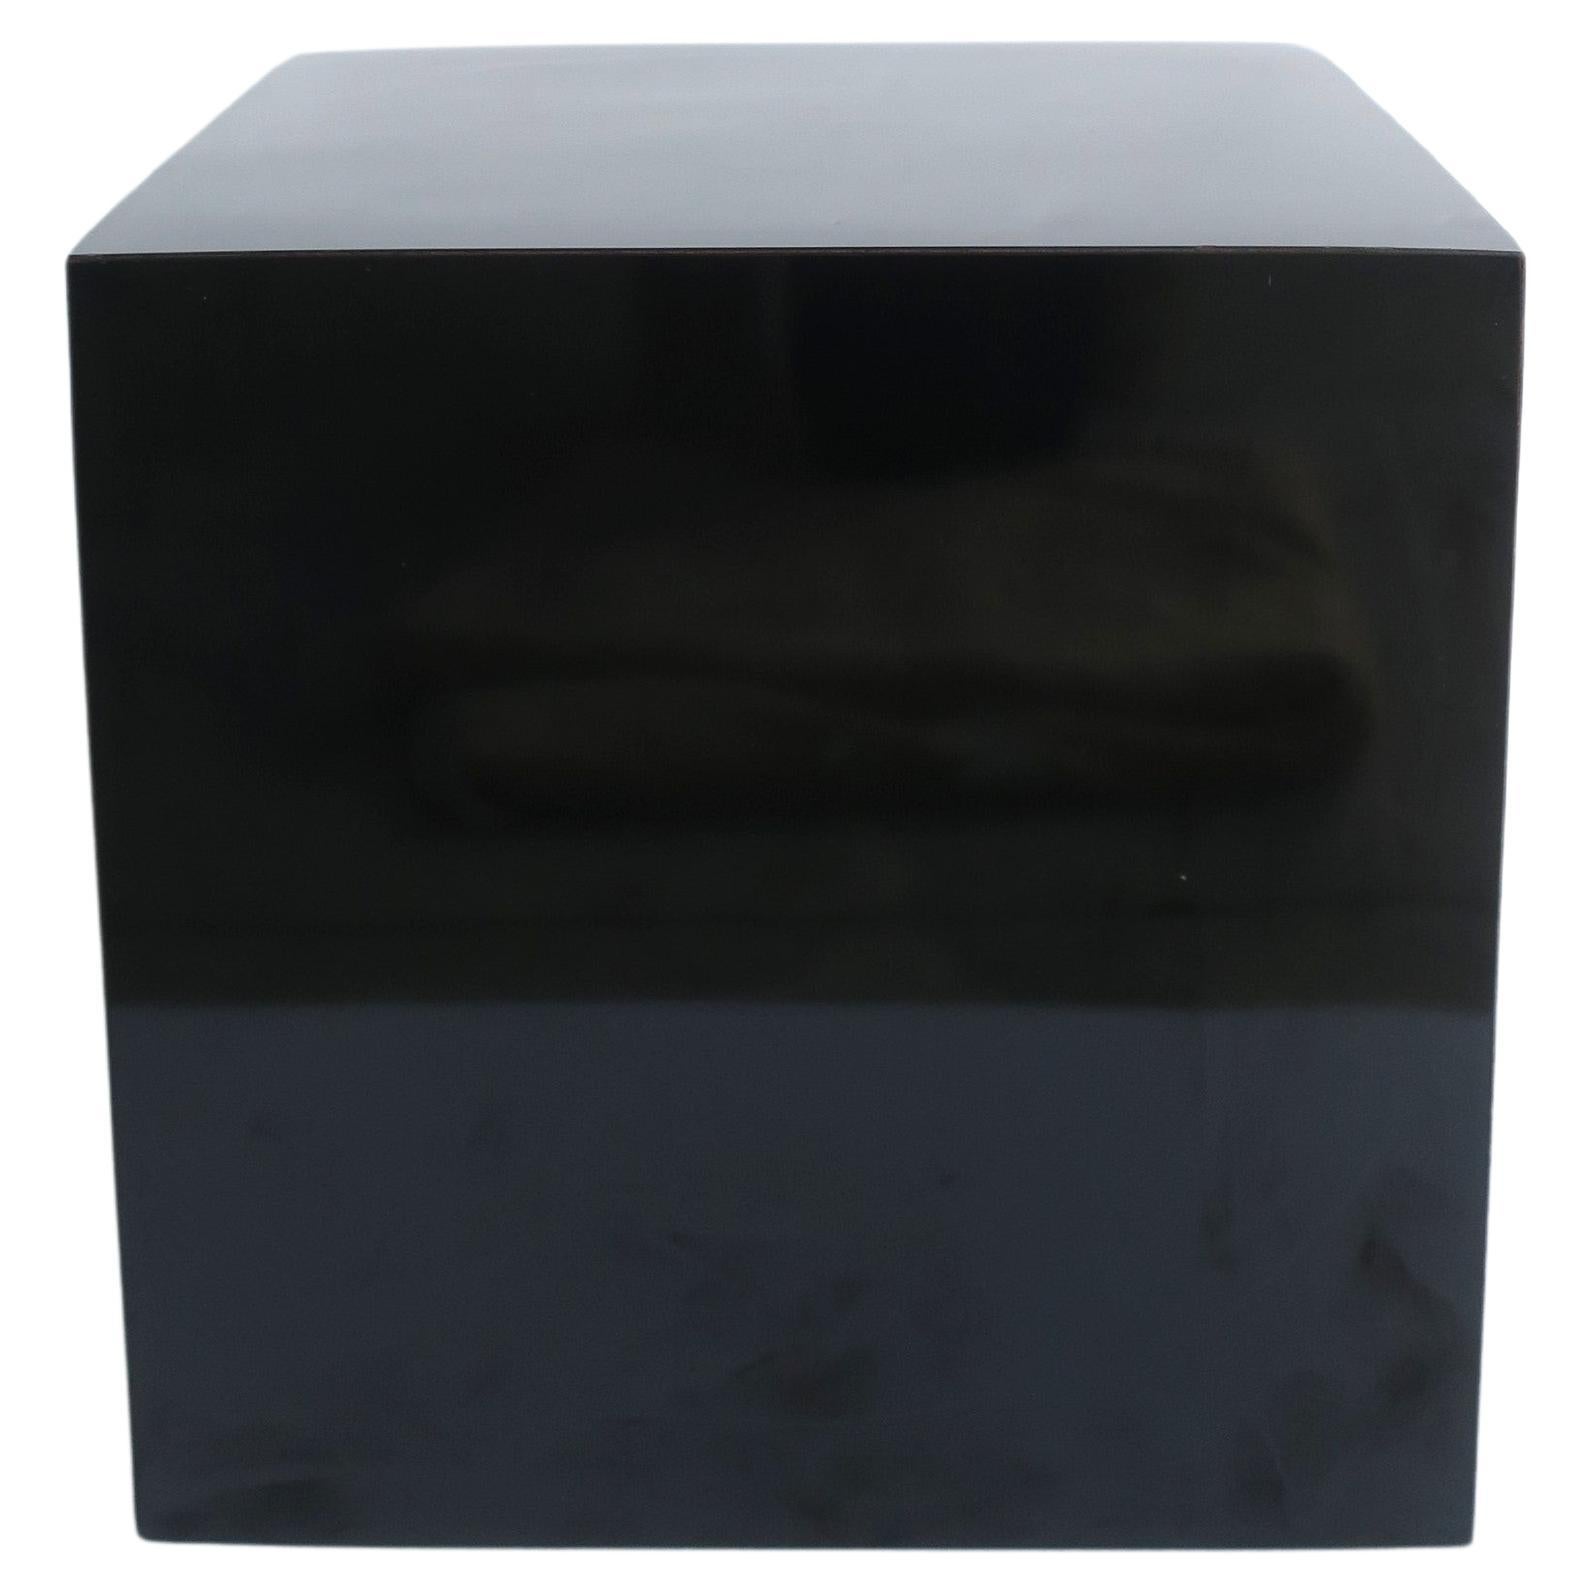 Black Cube Pedestal Table For Sale